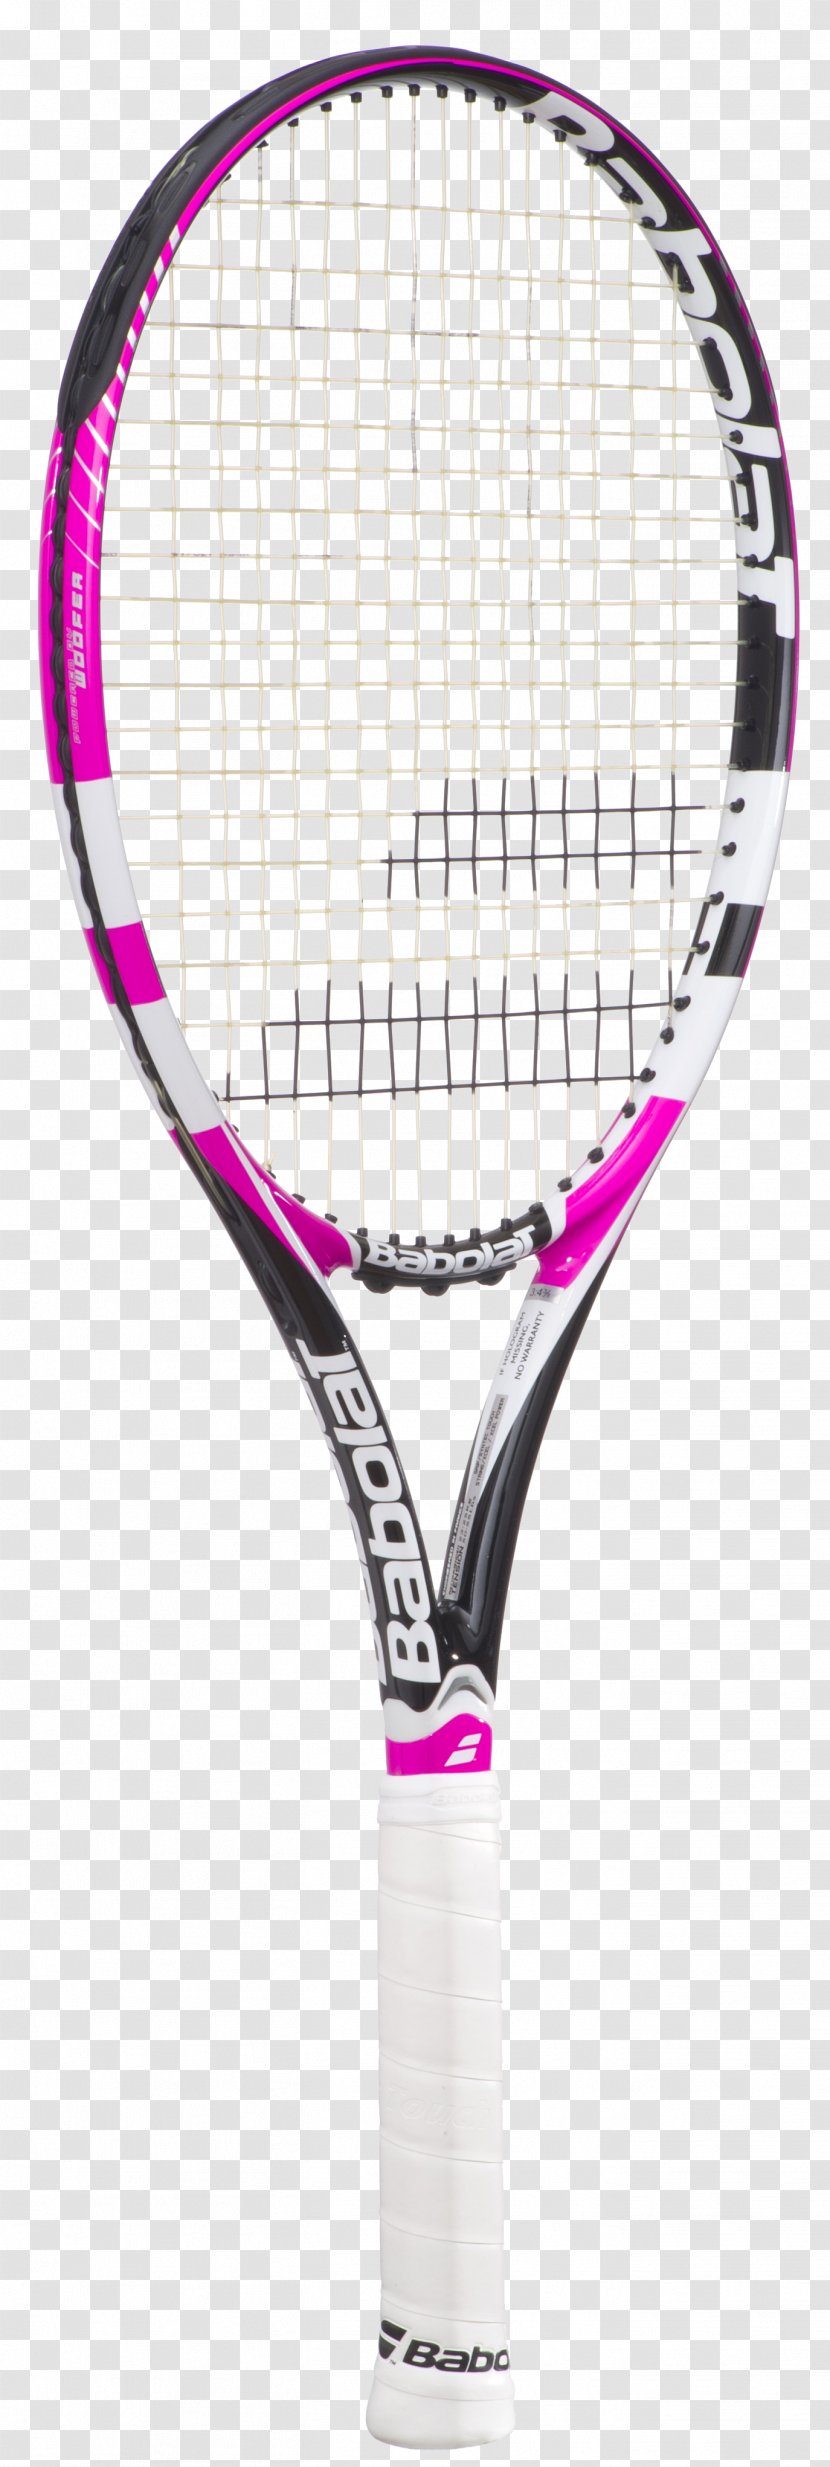 Strings Babolat Racket Tennis Rakieta Tenisowa - Kimiko Date - Dunlop Transparent PNG